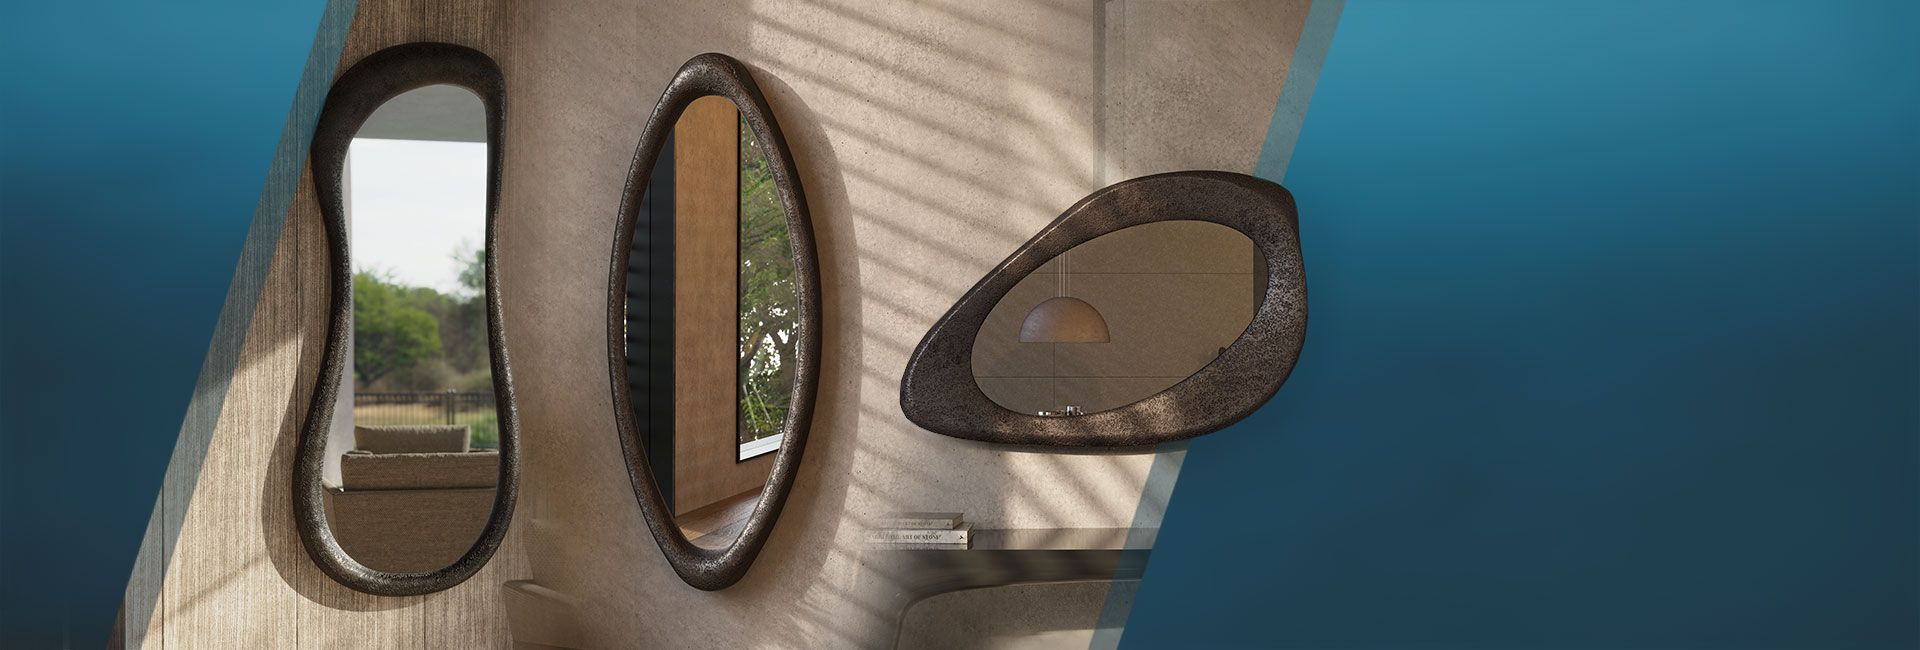 Slideshow with Gansk's new mirrors